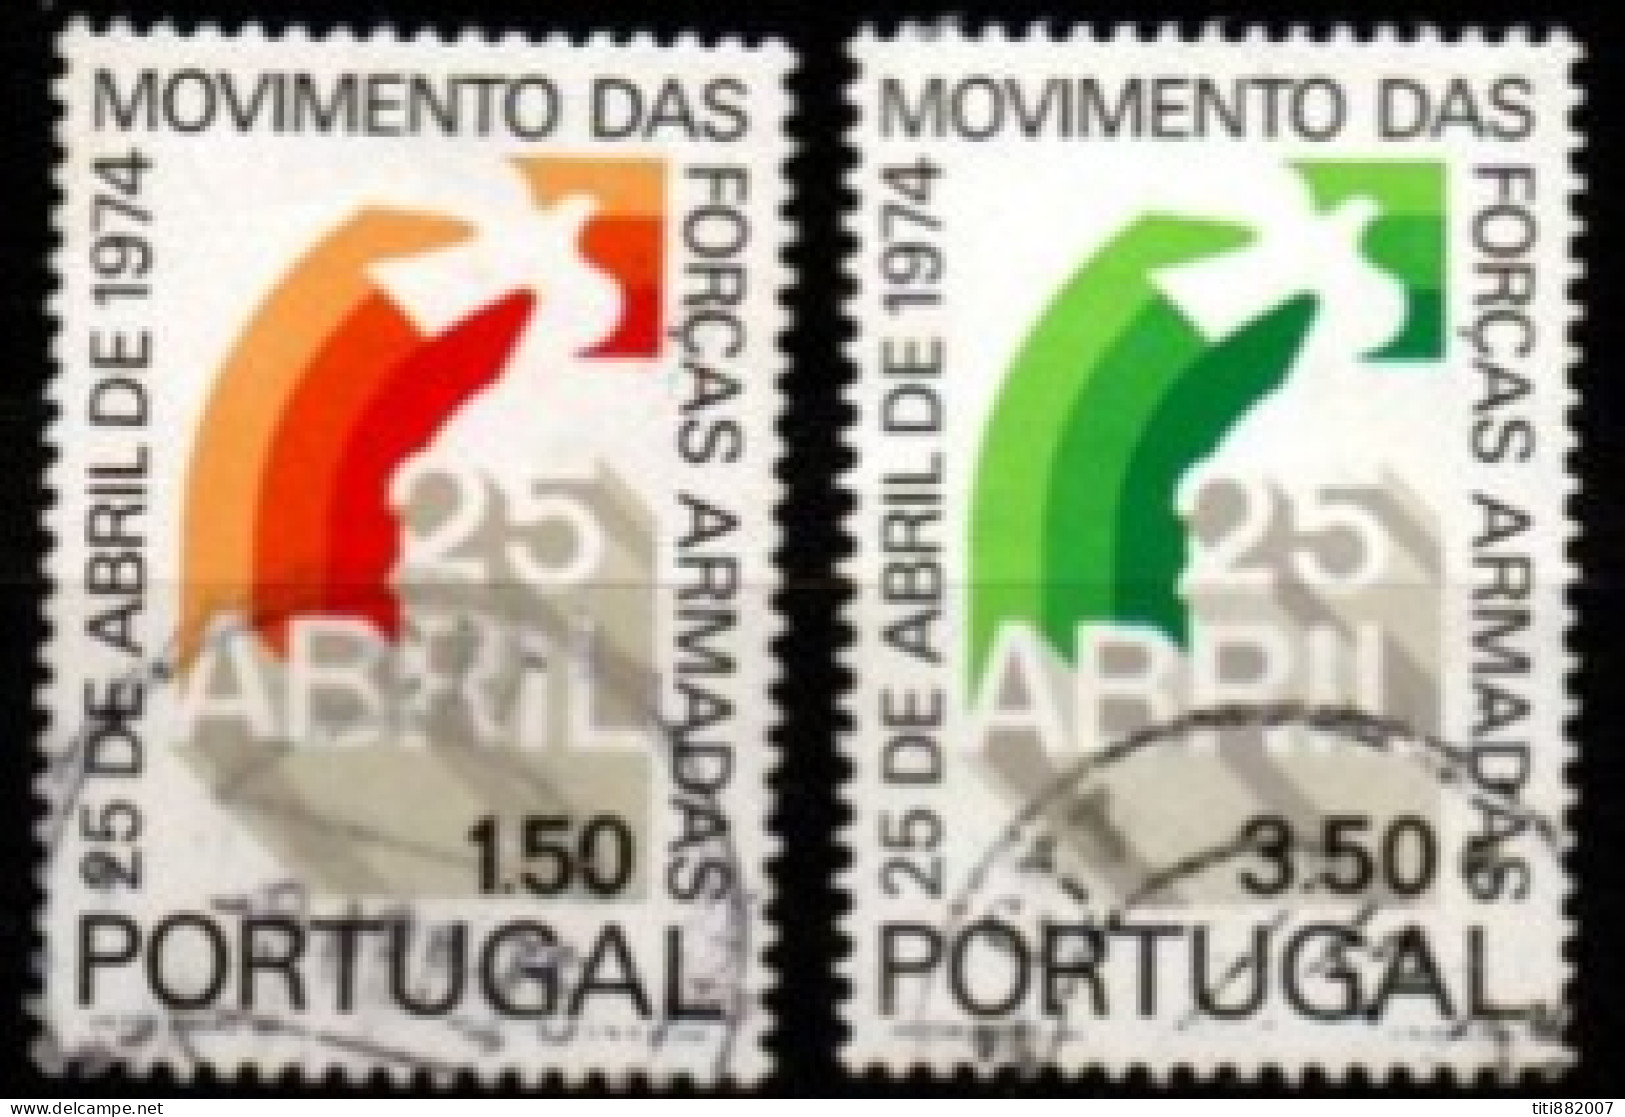 PORTUGAL    -   1974.    Y&T N° 1246 / 1247 Oblitérés.     Armées - Used Stamps